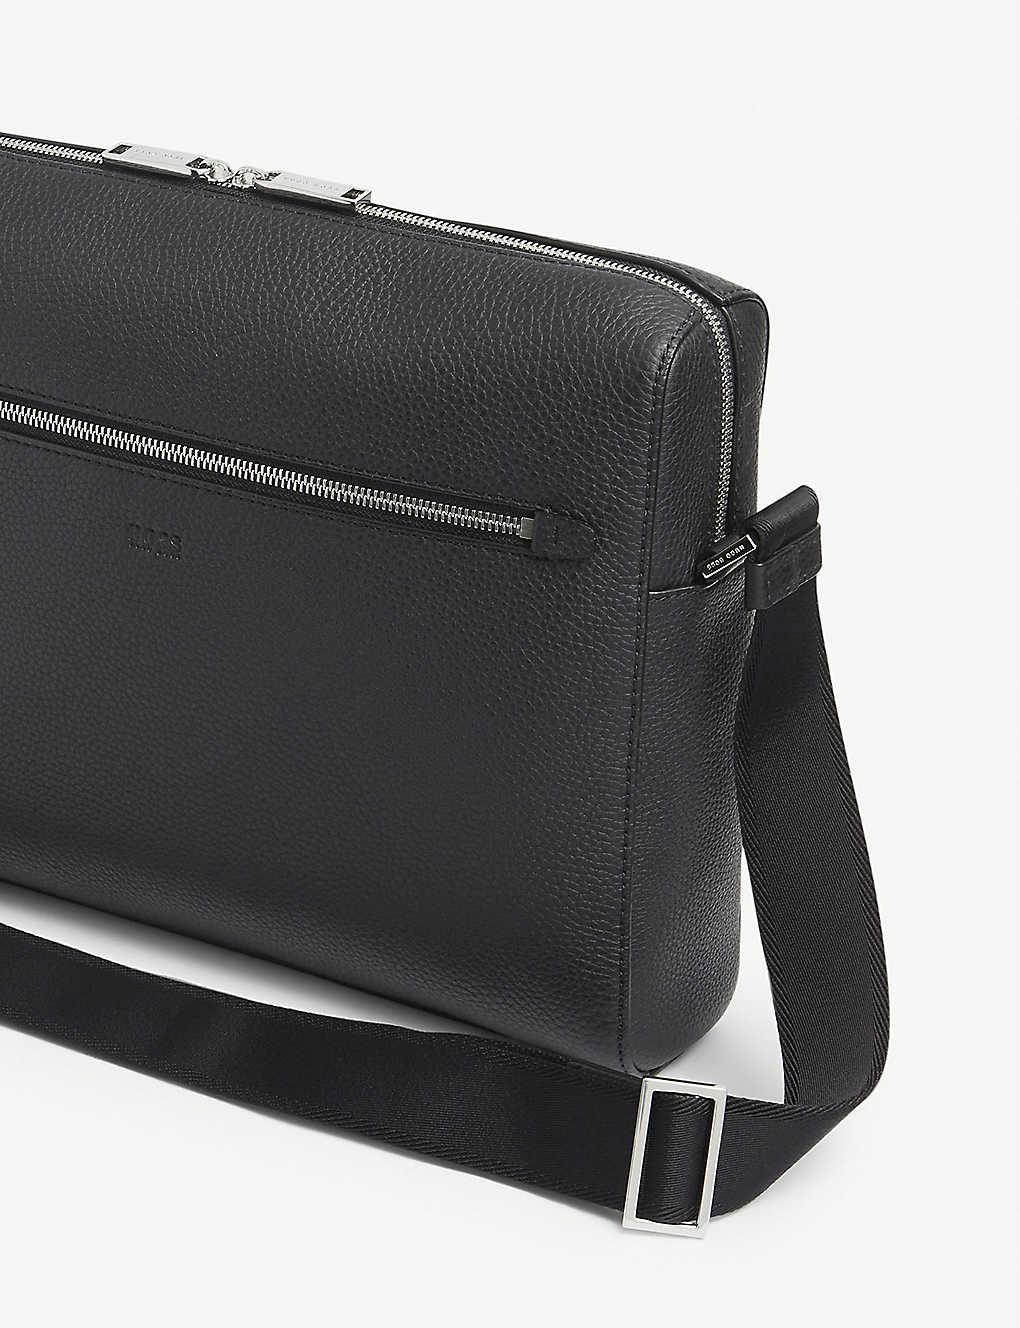 BOSS by HUGO BOSS Crosstown Leather Laptop Bag in Black for Men | Lyst